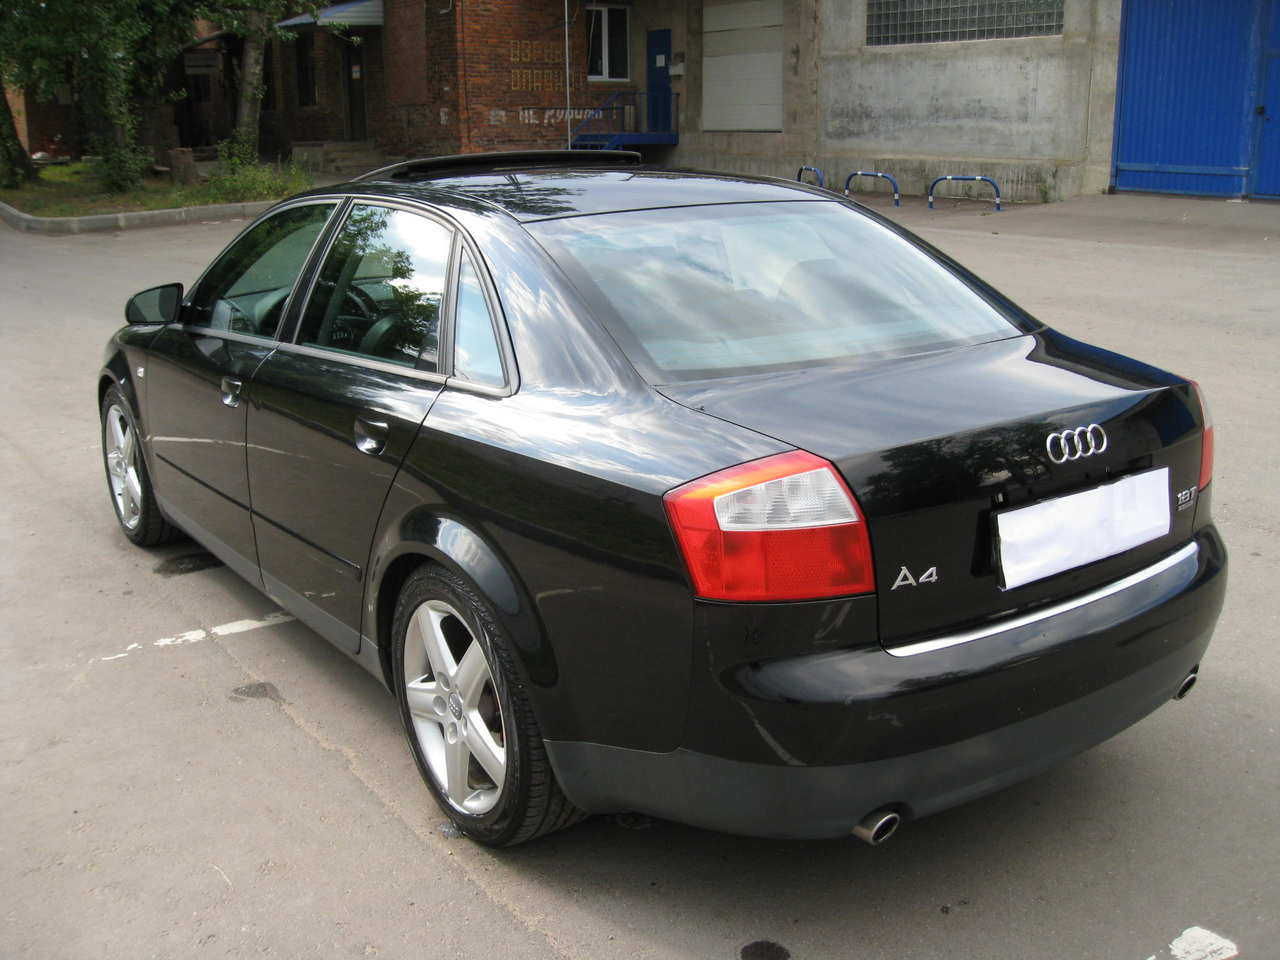 Купить ауди а6 2002. Audi a4 2002. Ауди а4 2002. Ауди а4 кватро 2002. "Audi" "a4" "2002" AX.